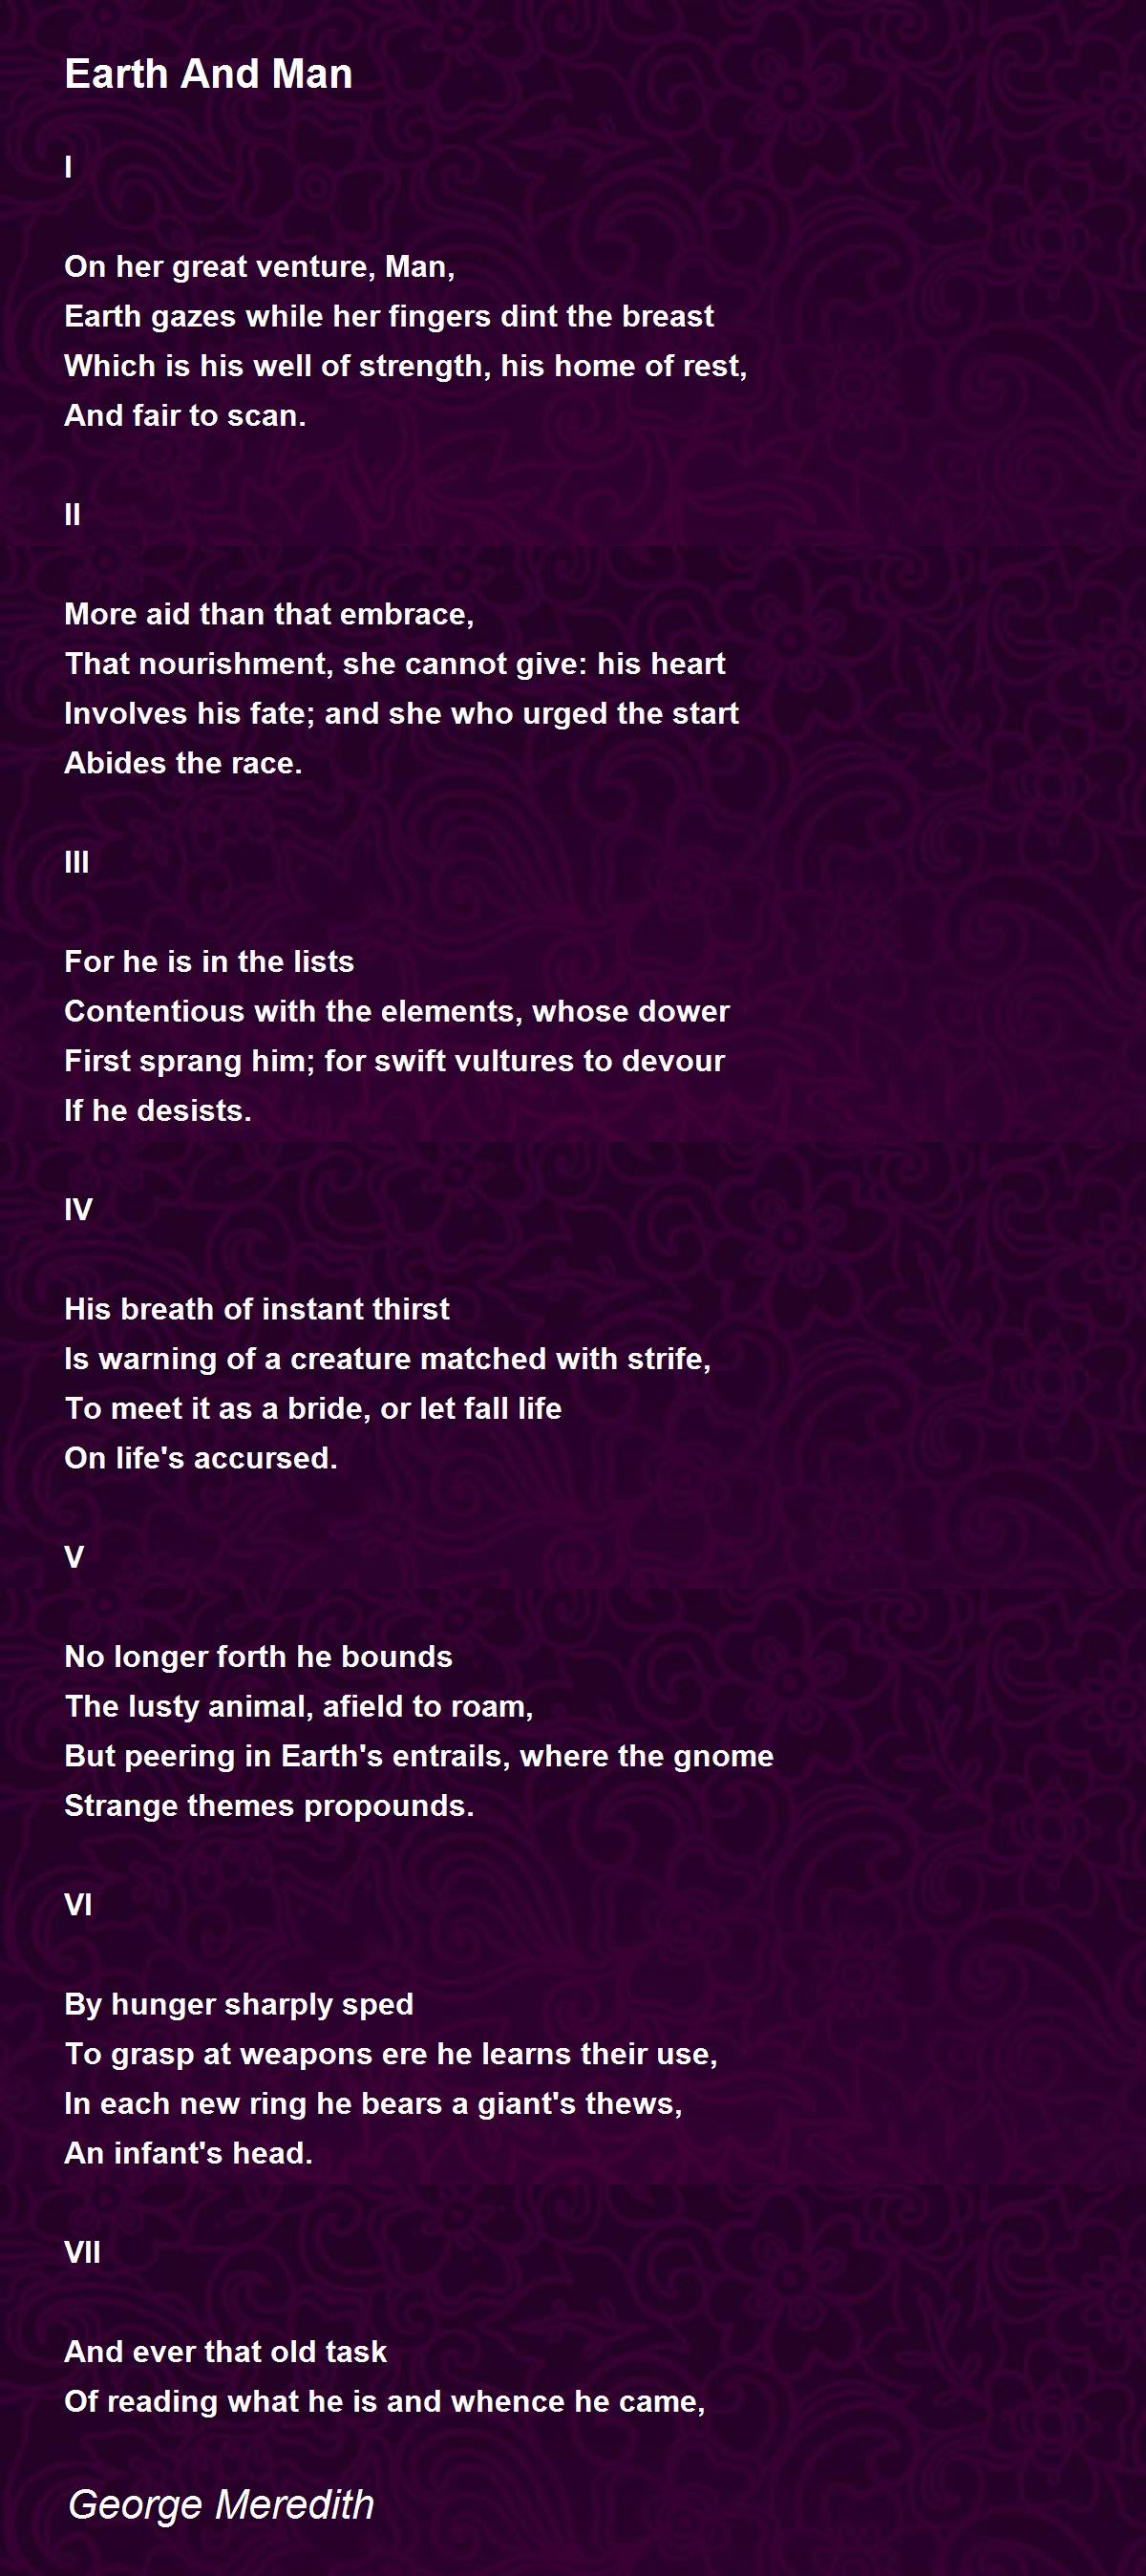 man of earth poem